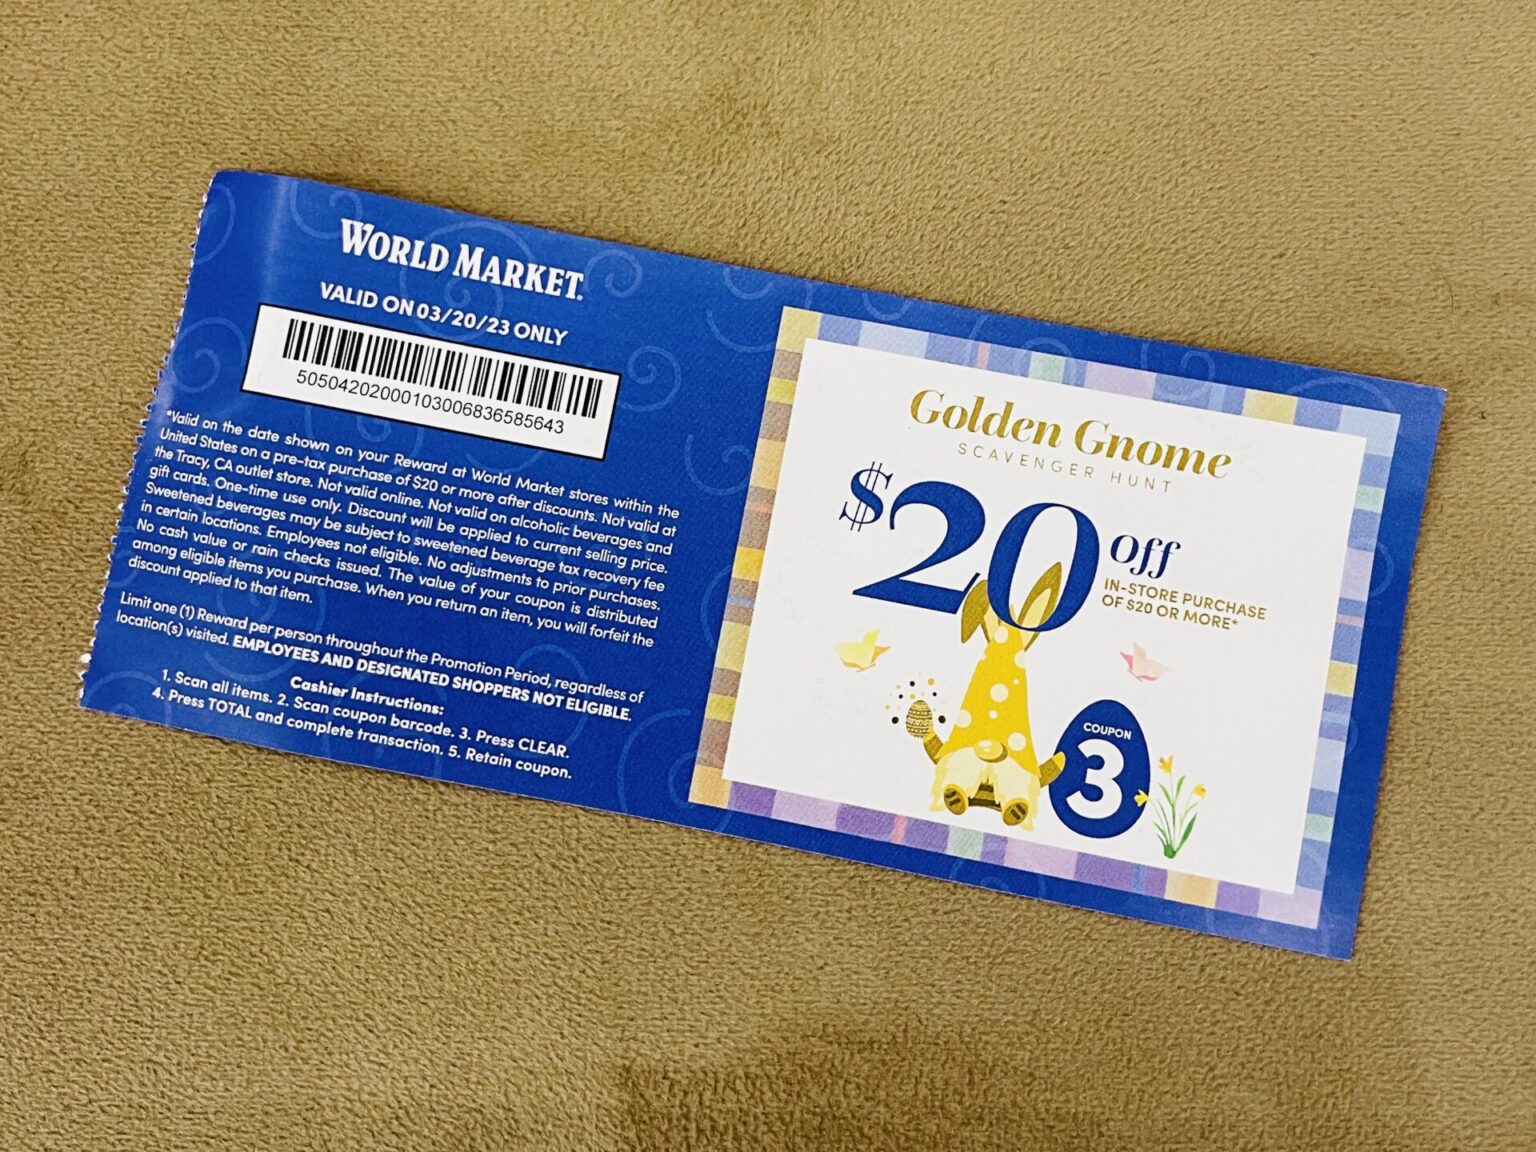 World Market's Golden Gnome Scavenger Hunt offers rewards of up to 100